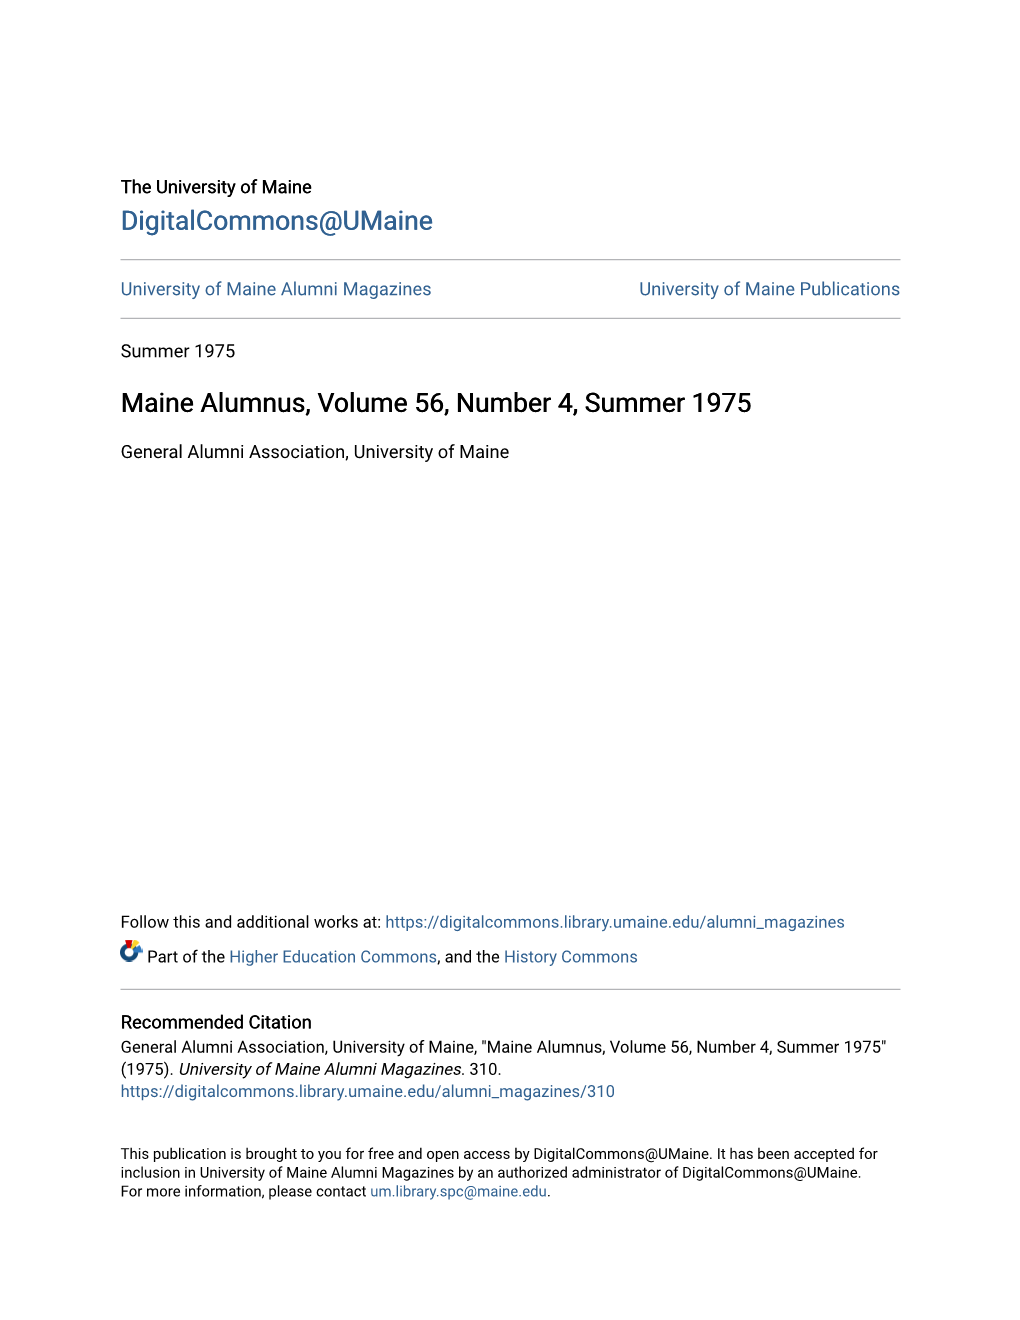 Maine Alumnus, Volume 56, Number 4, Summer 1975